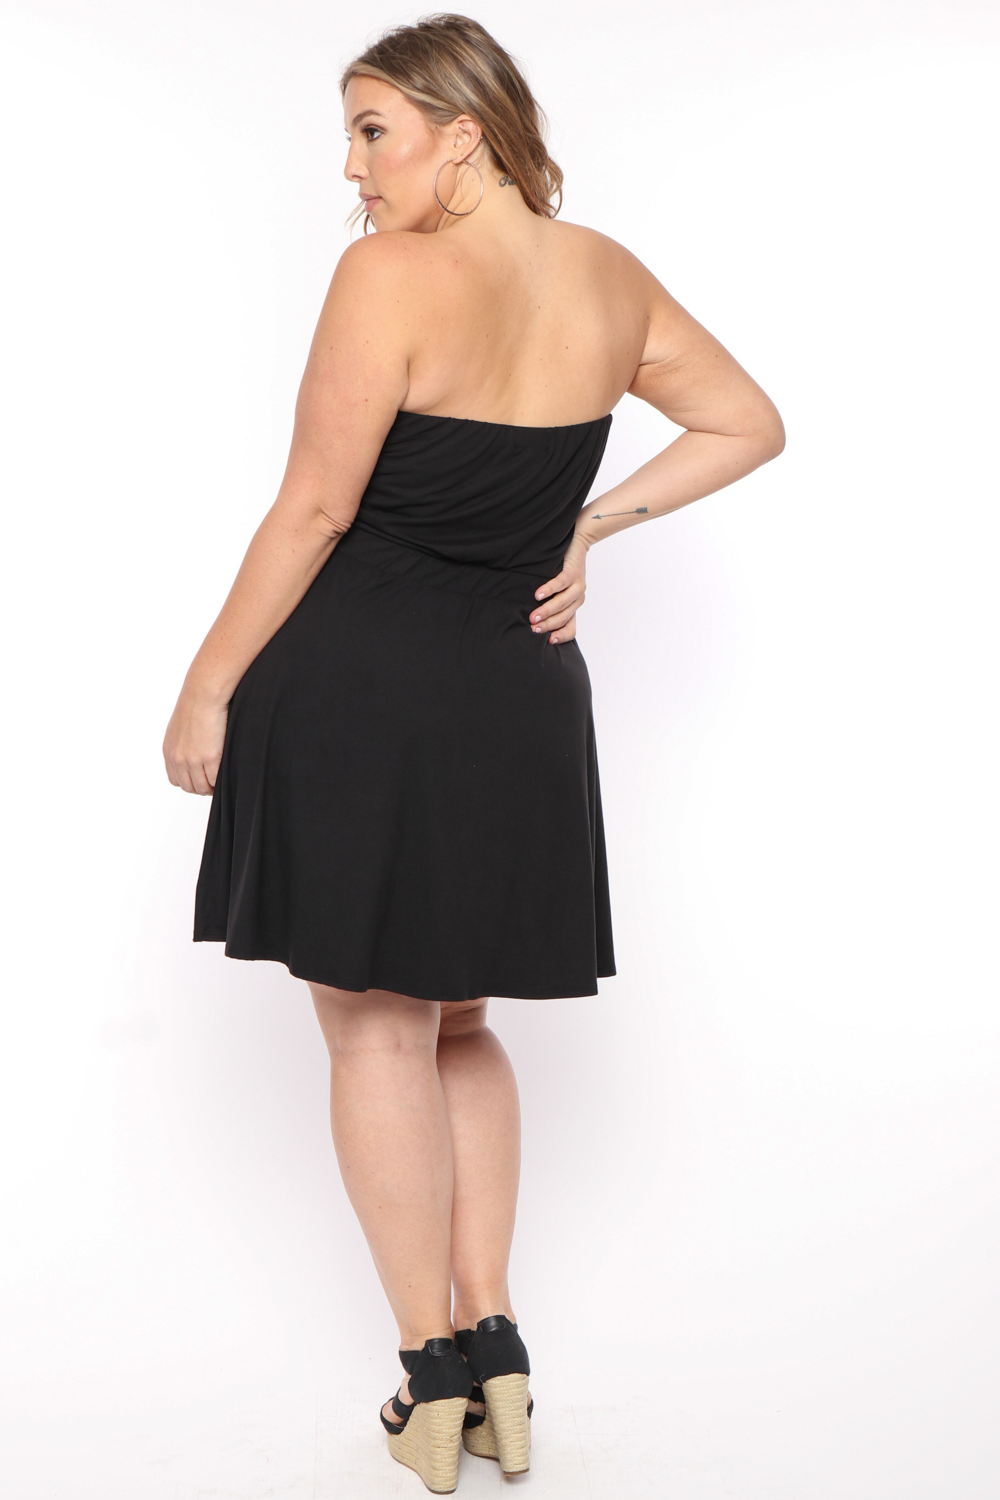 Curvy Sense Dresses Plus Size Strapless Belted Flare Dress - Black